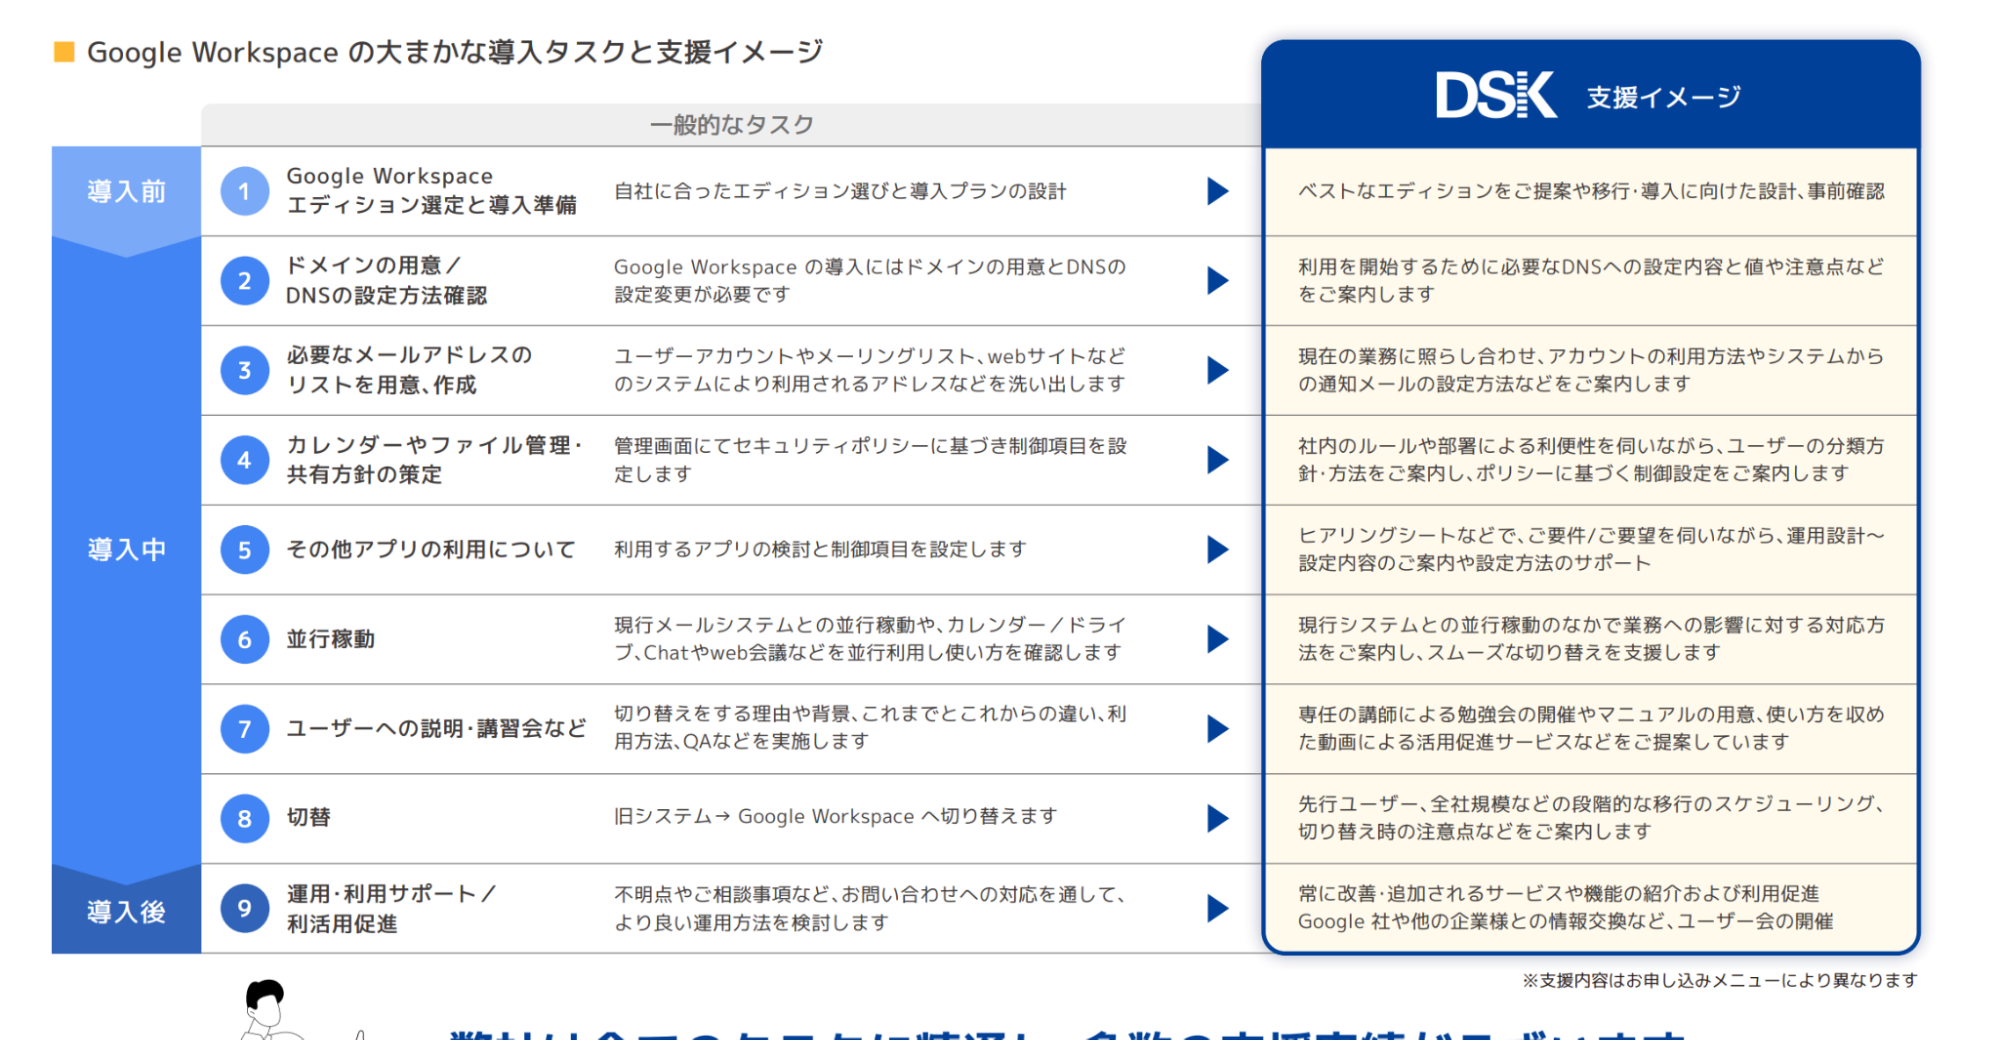 DSK支援イメージ表